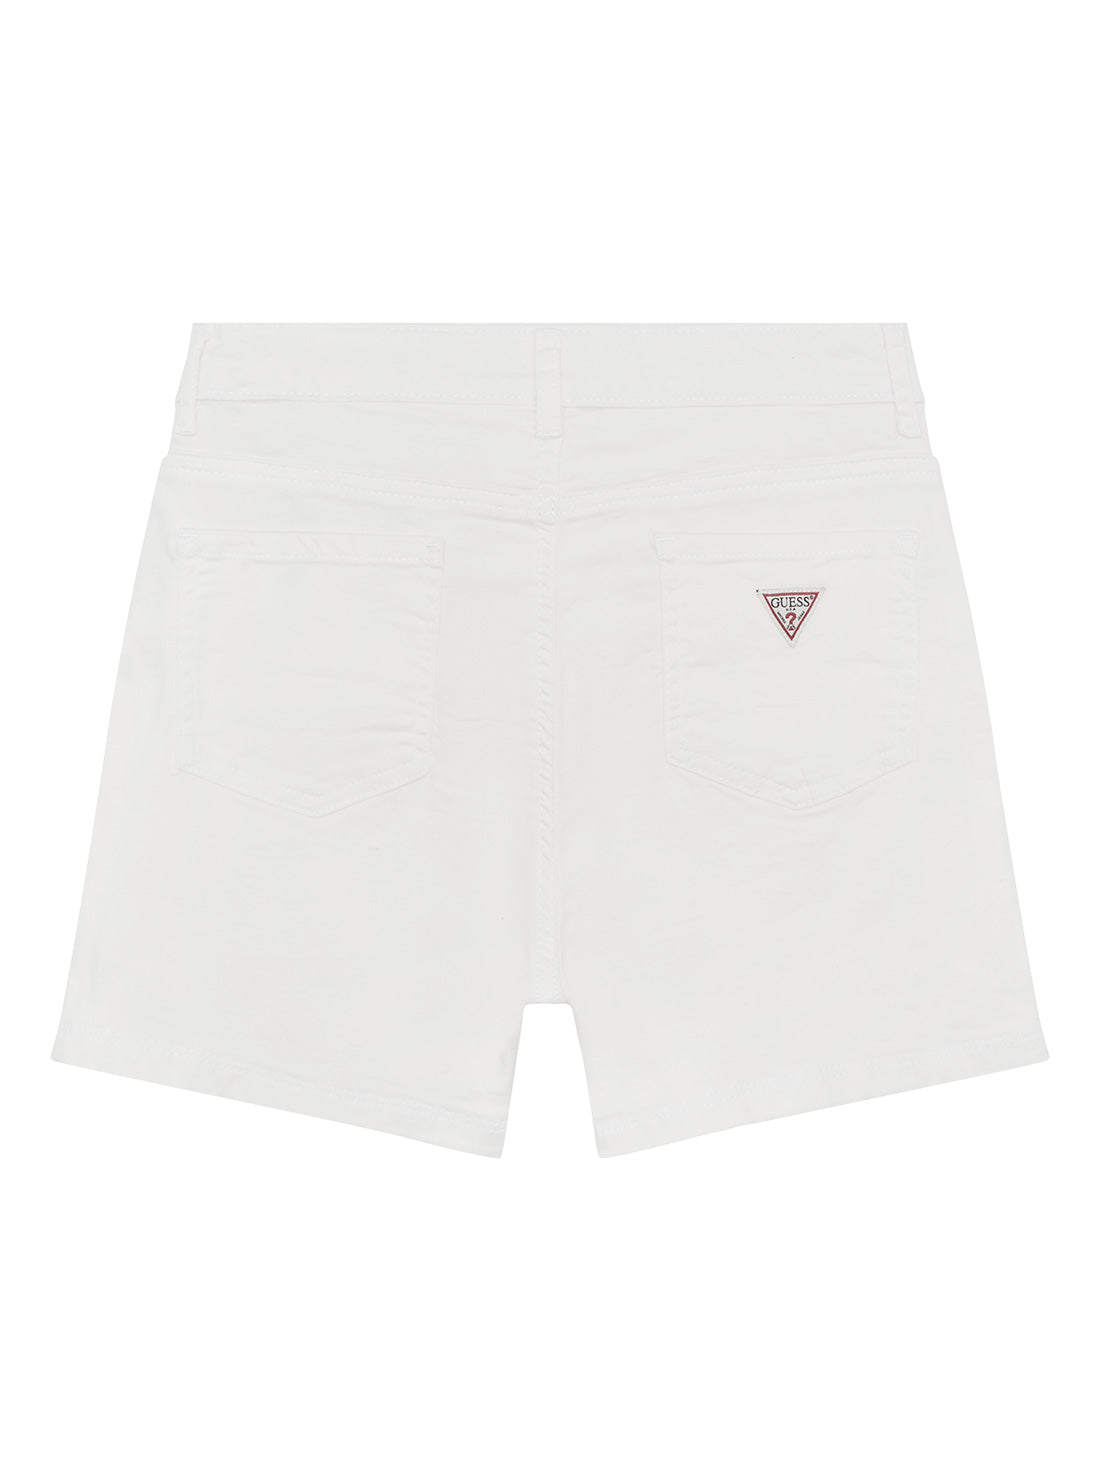 White Stretch Bull Denim Shorts (7-16)